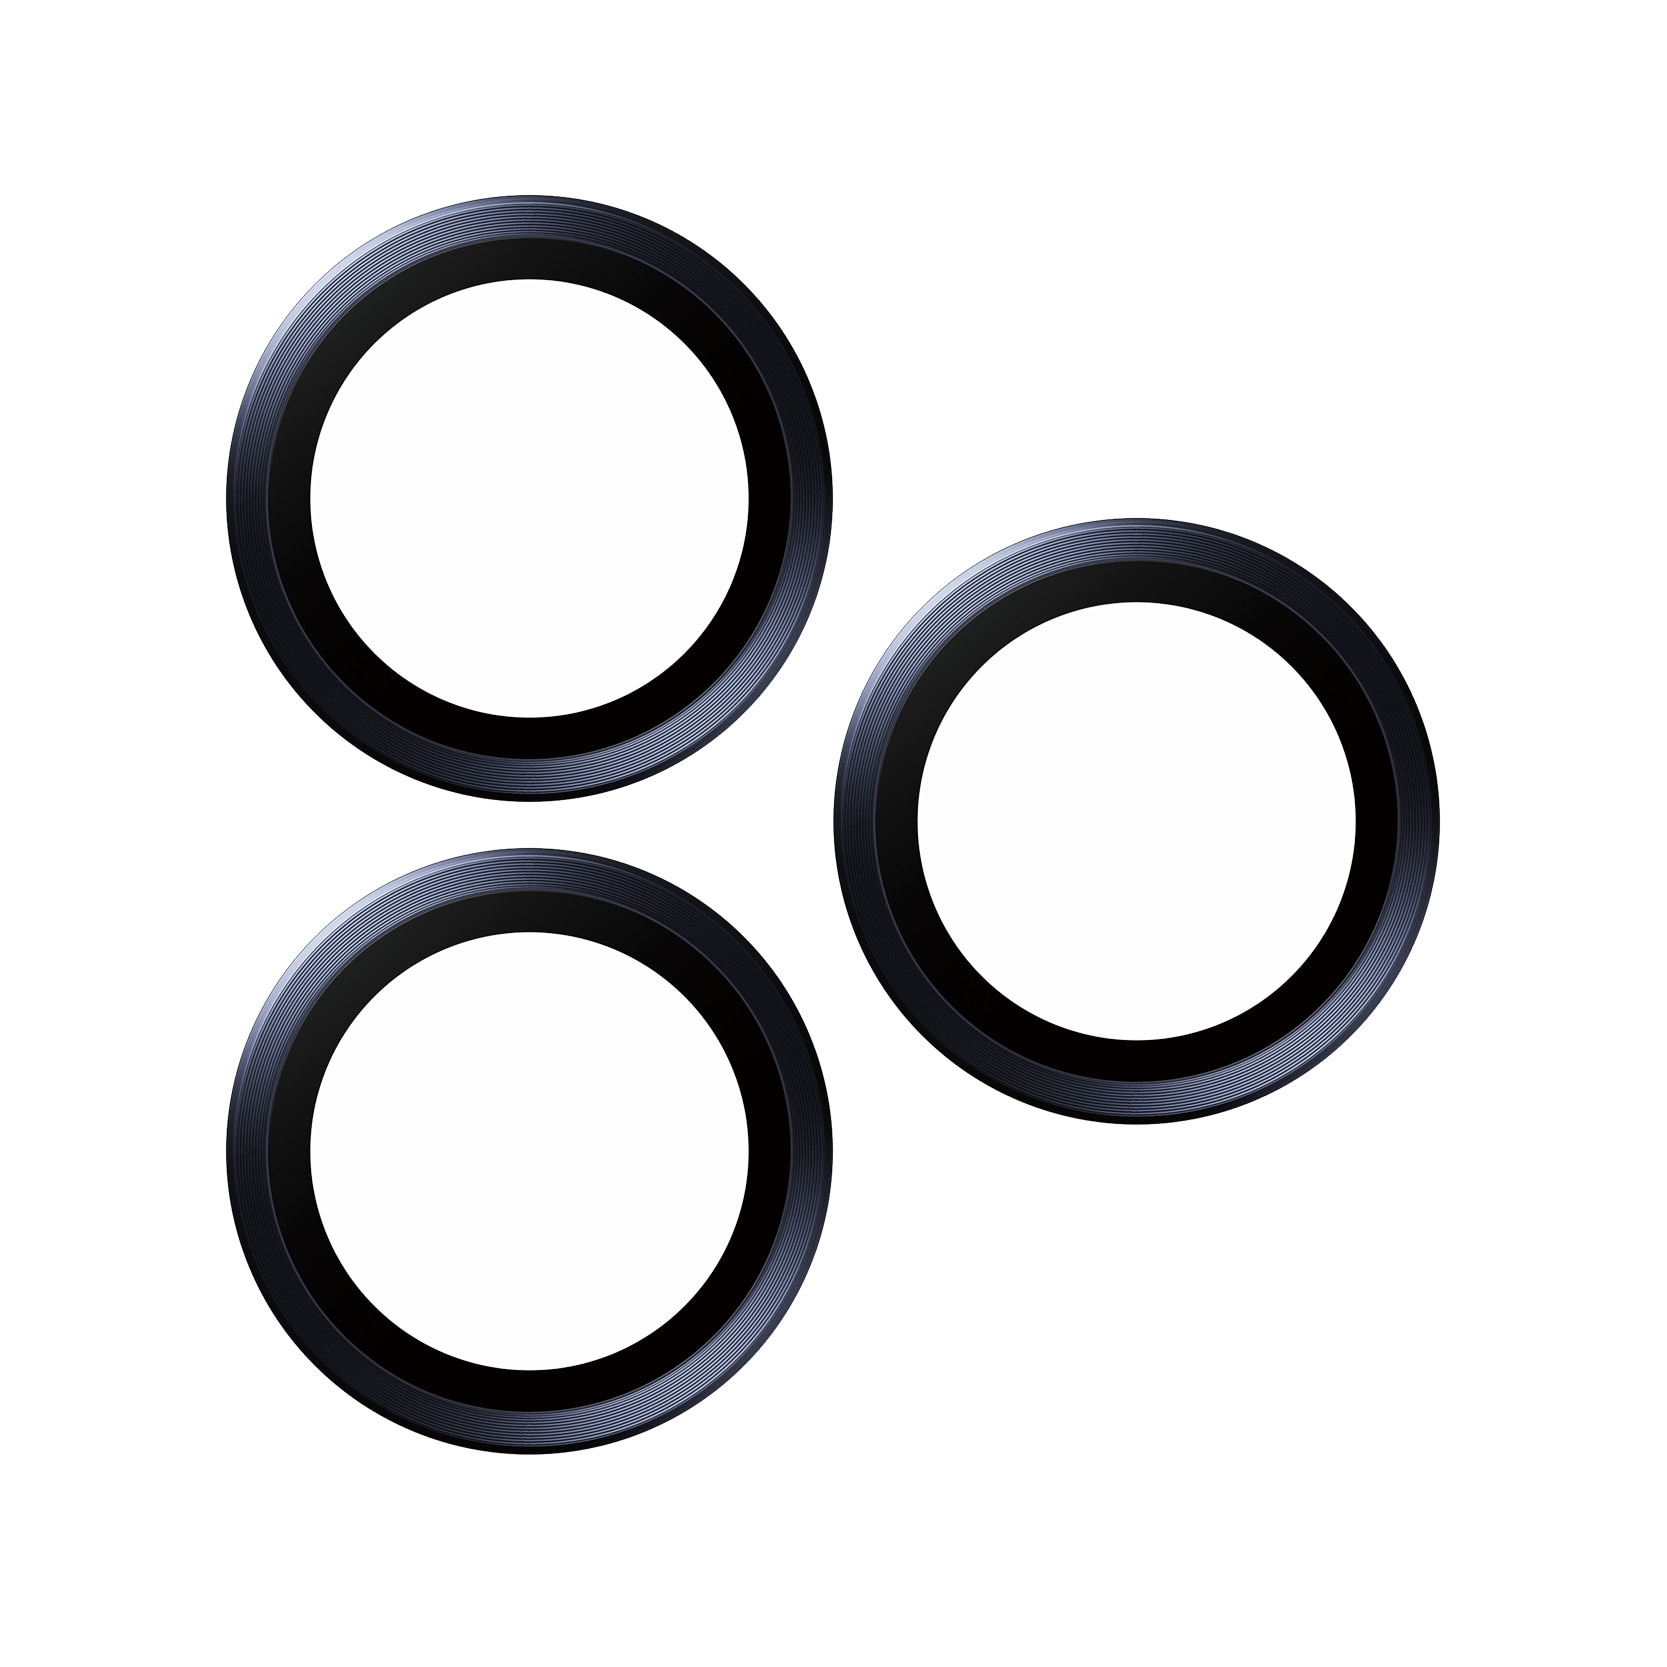 iPhone 15 Pro Max Hoops Camera Lens Protector Blue Metal